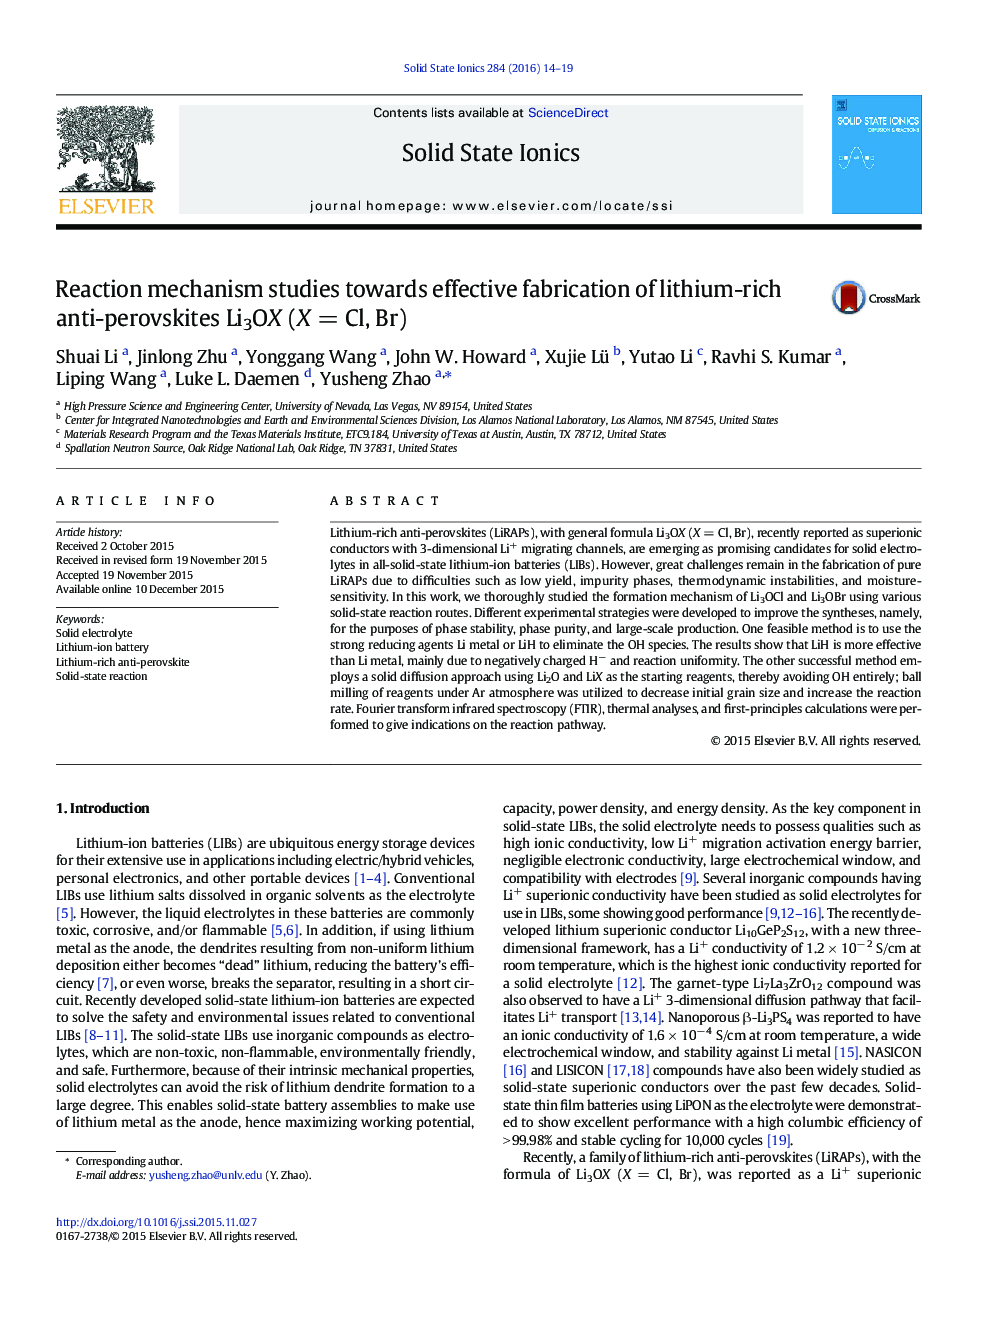 Reaction mechanism studies towards effective fabrication of lithium-rich anti-perovskites Li3OX (X = Cl, Br)